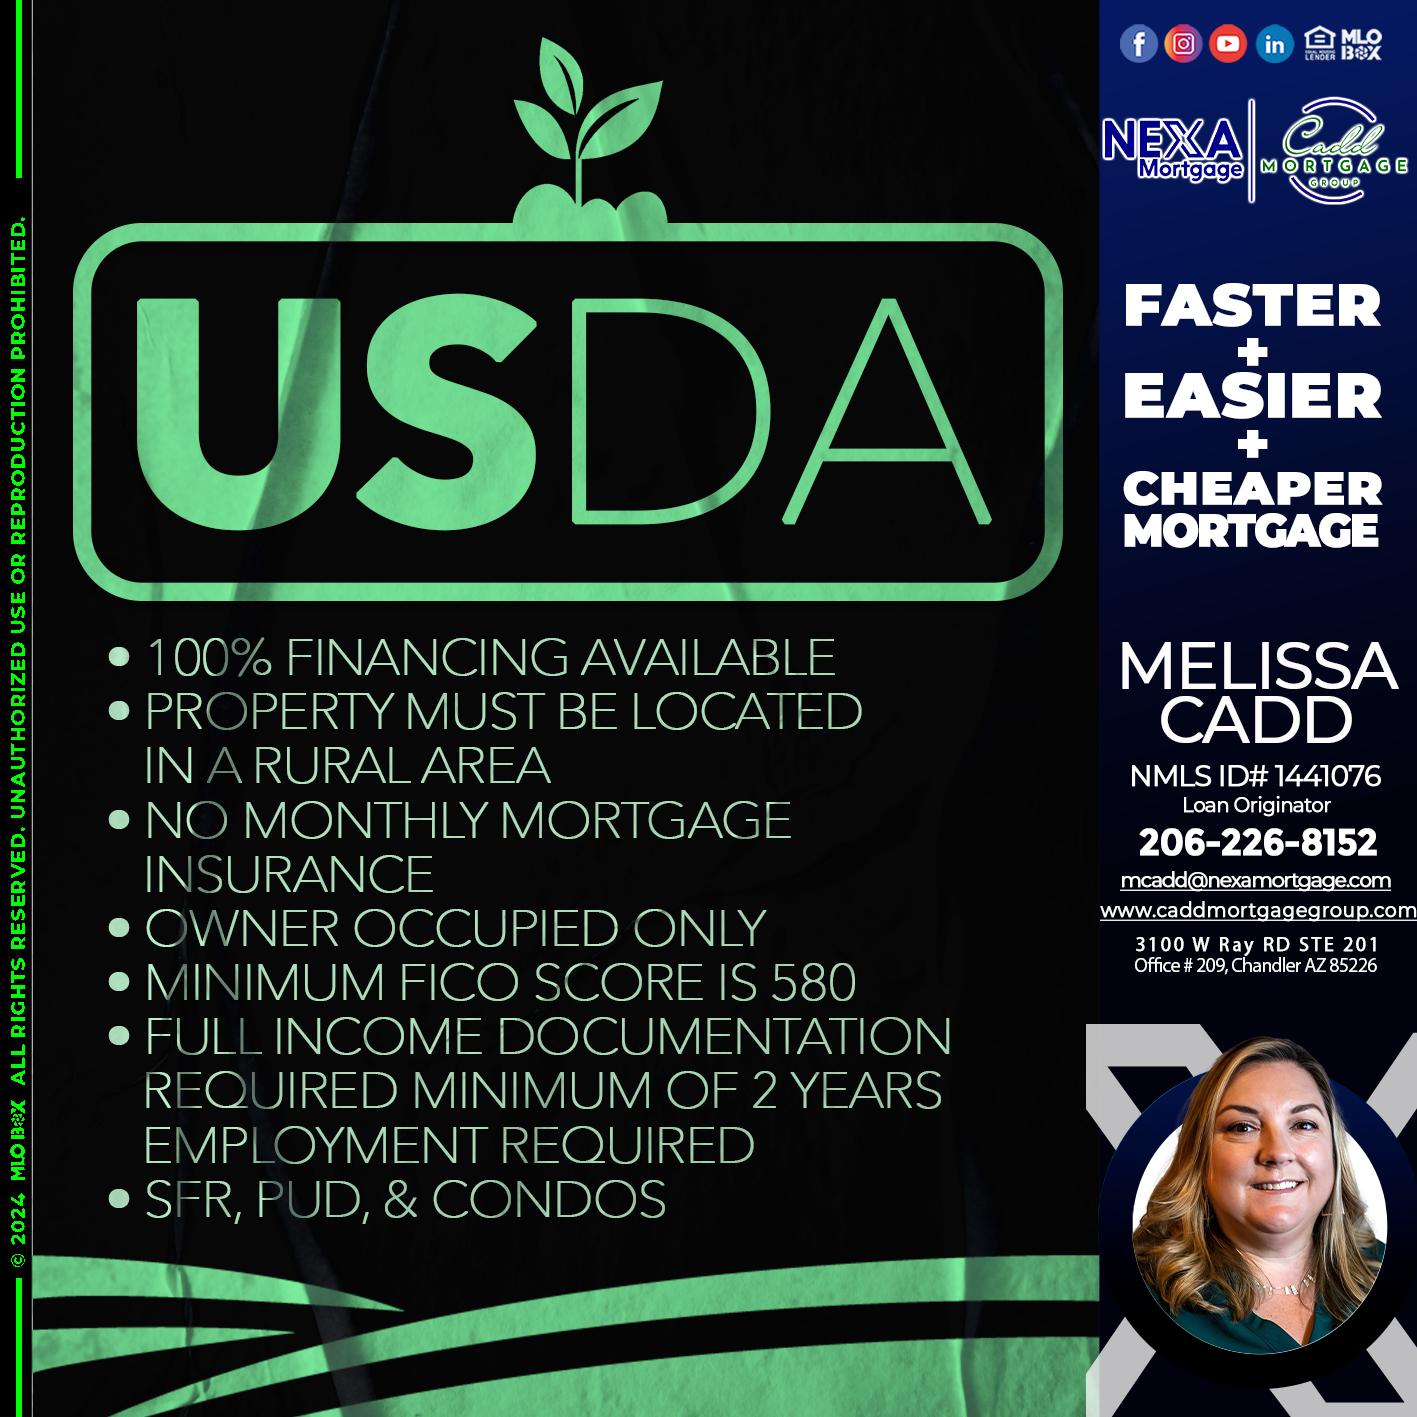 USDA - Melissa Cadd -Loan Originator